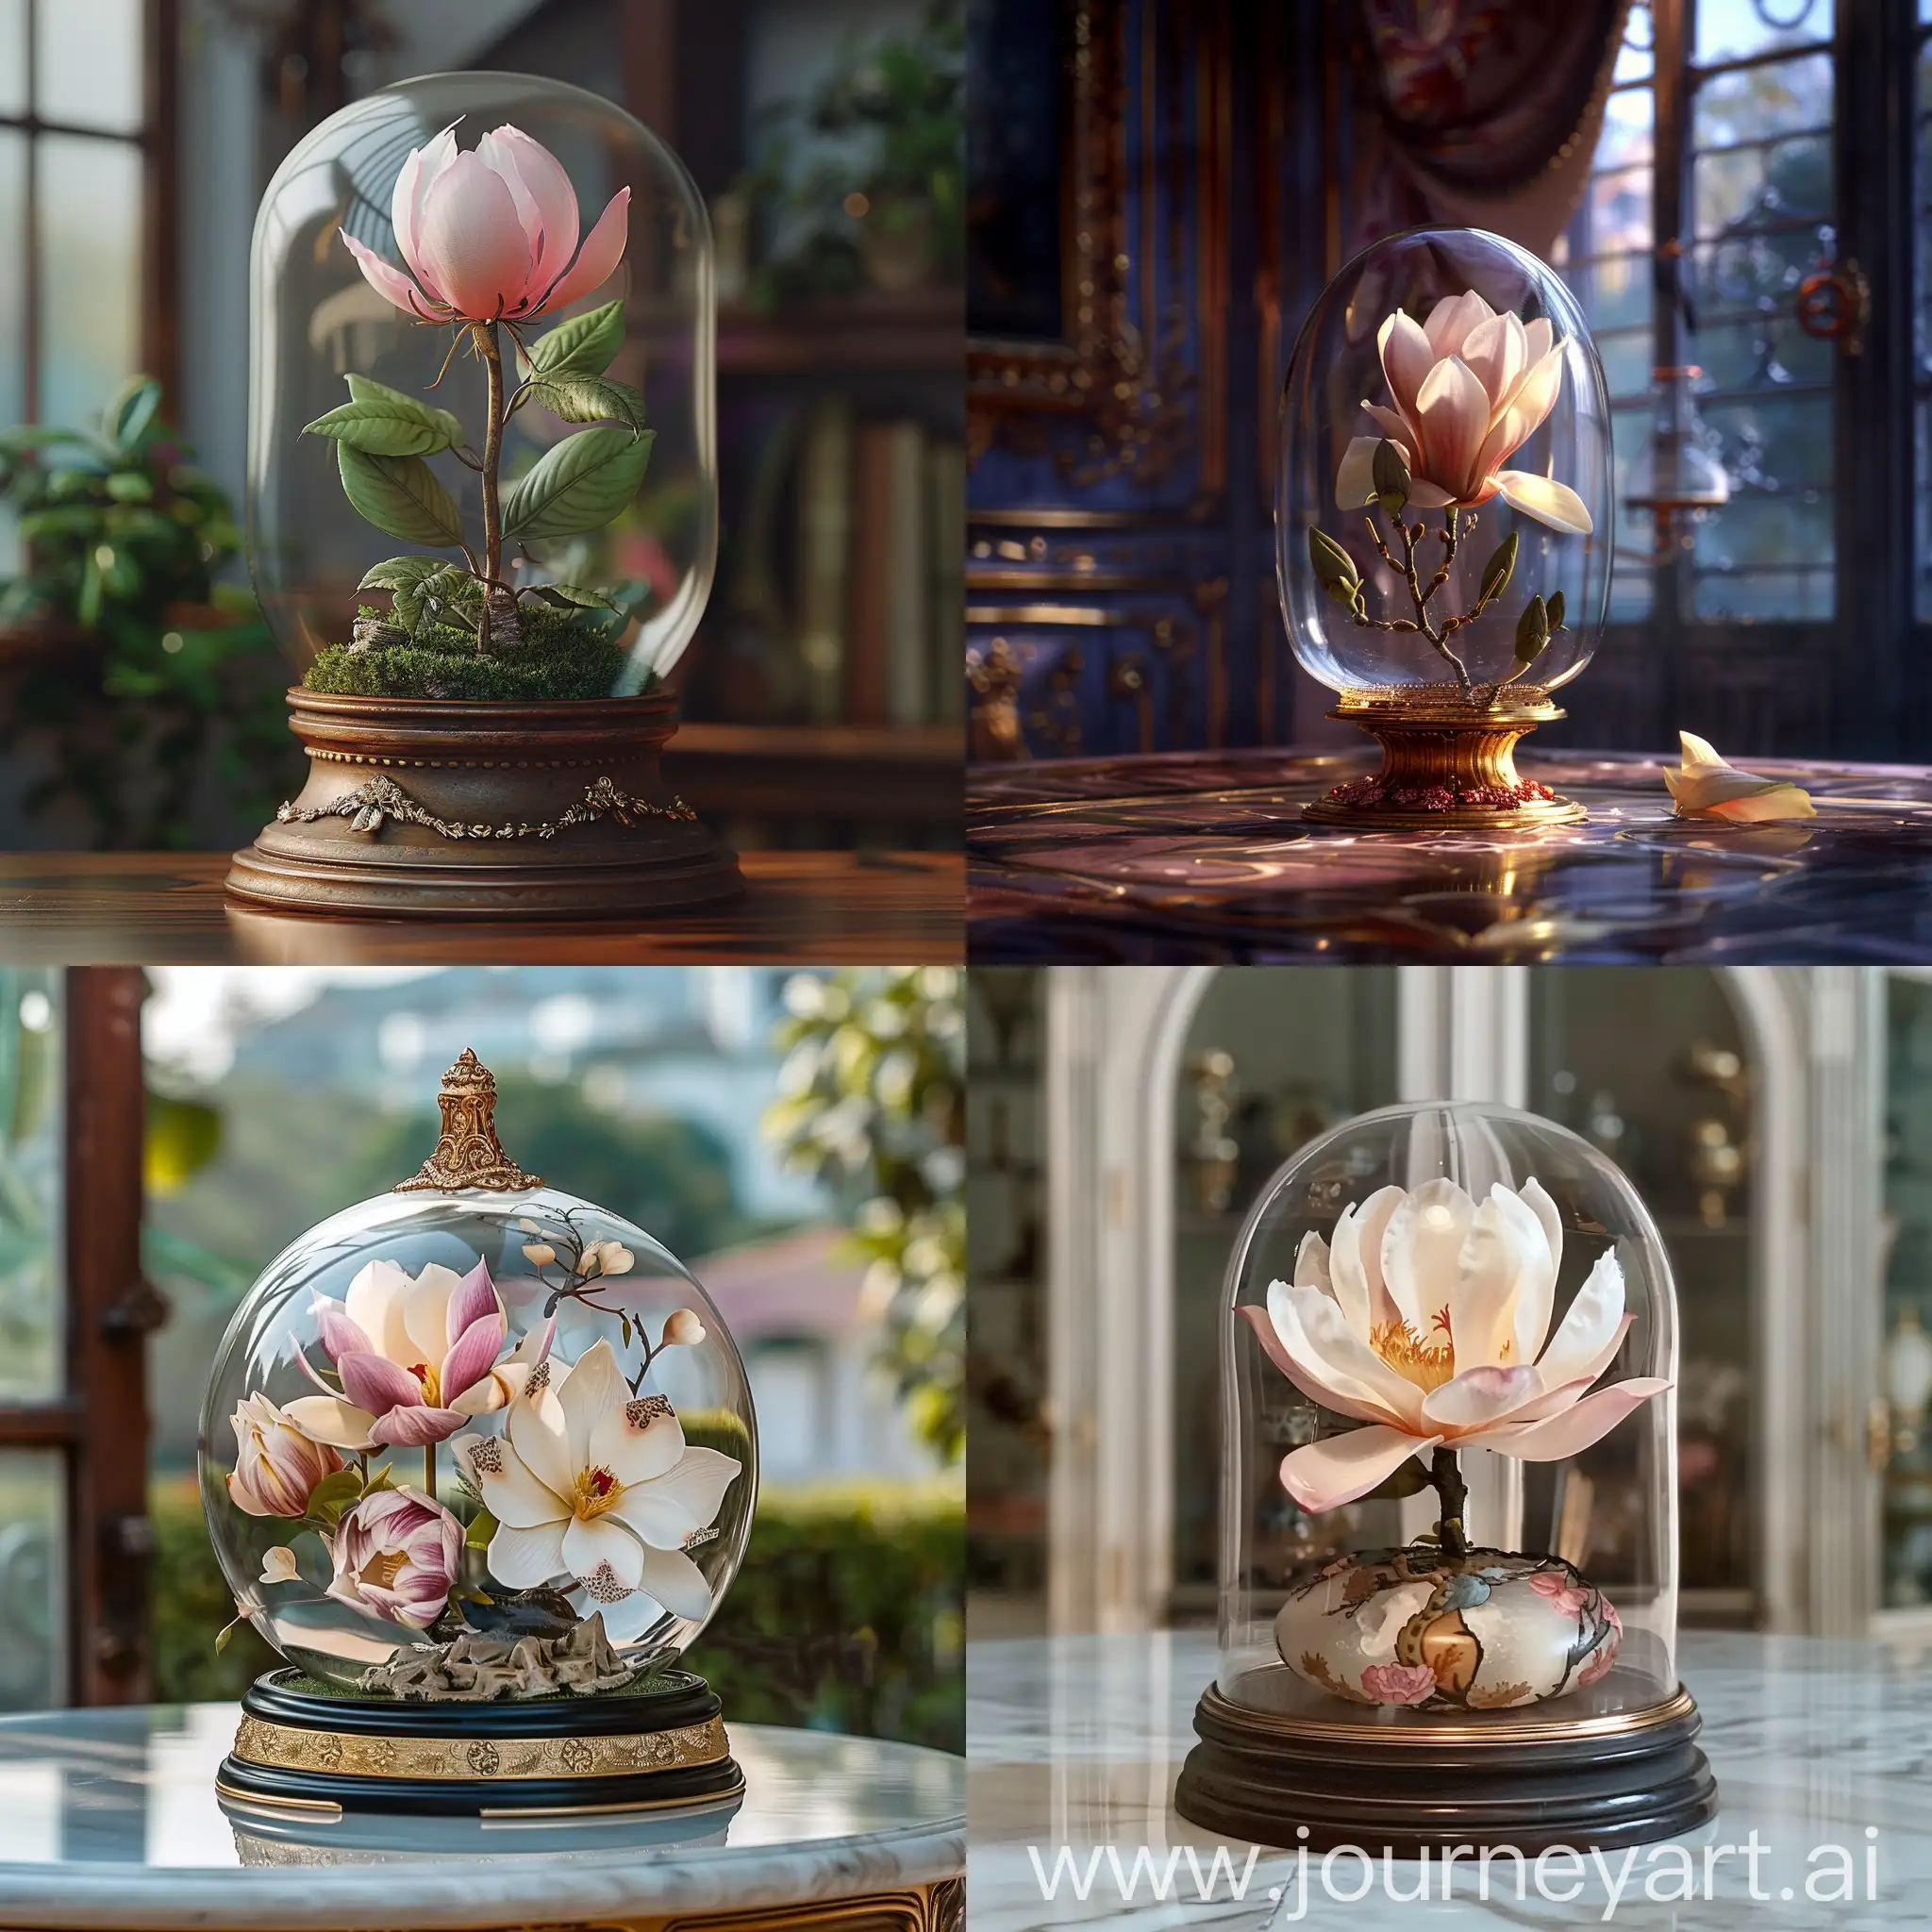 Exquisite-GlassDomed-Flower-in-Royal-Morning-Setting